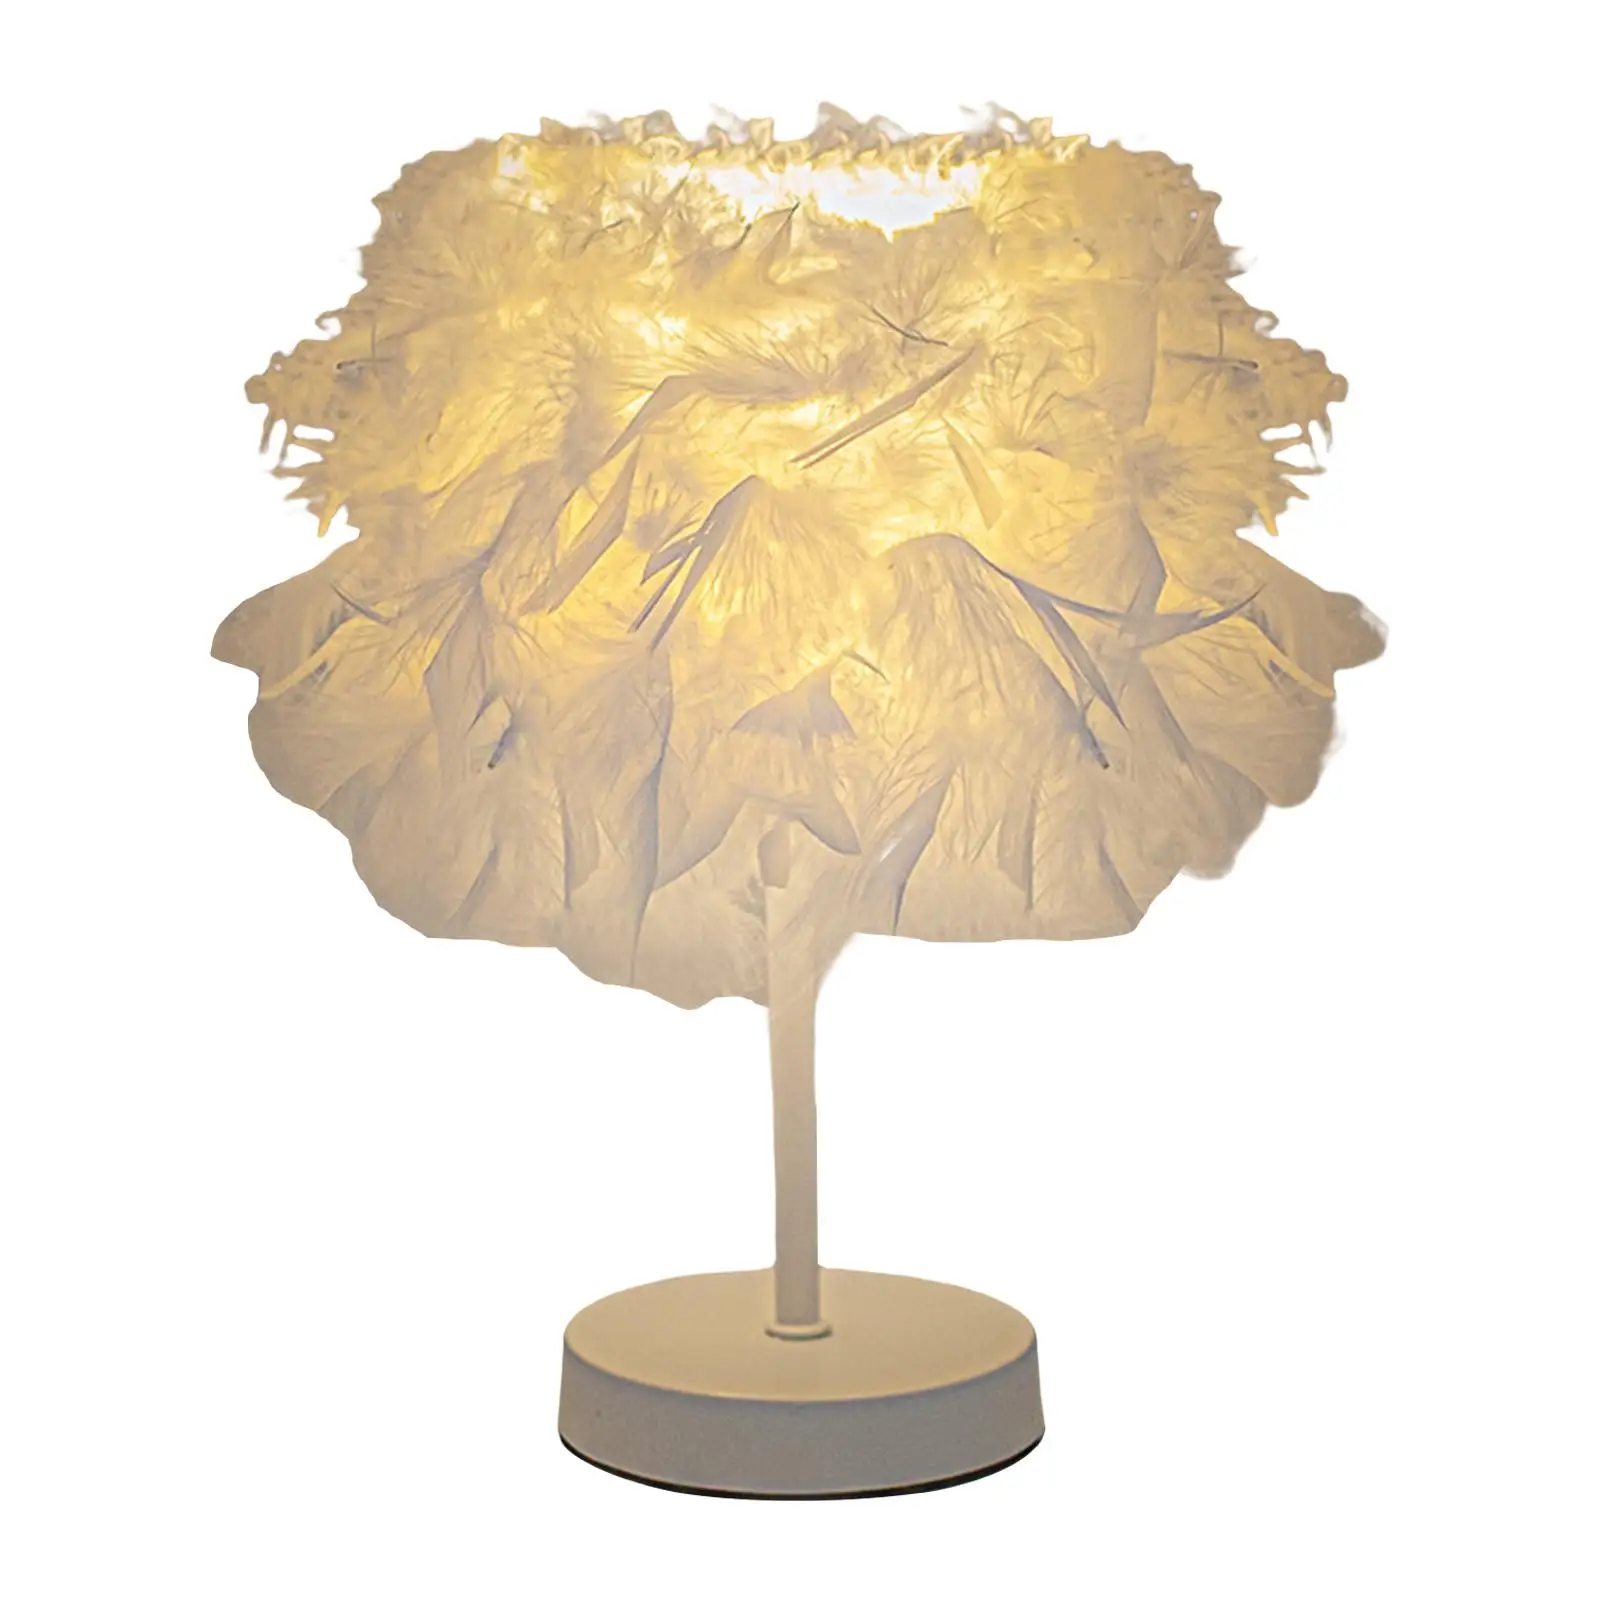 Romantic Feather Shade Table Lamp Fixture Night Lights Decorative Lantern Desk